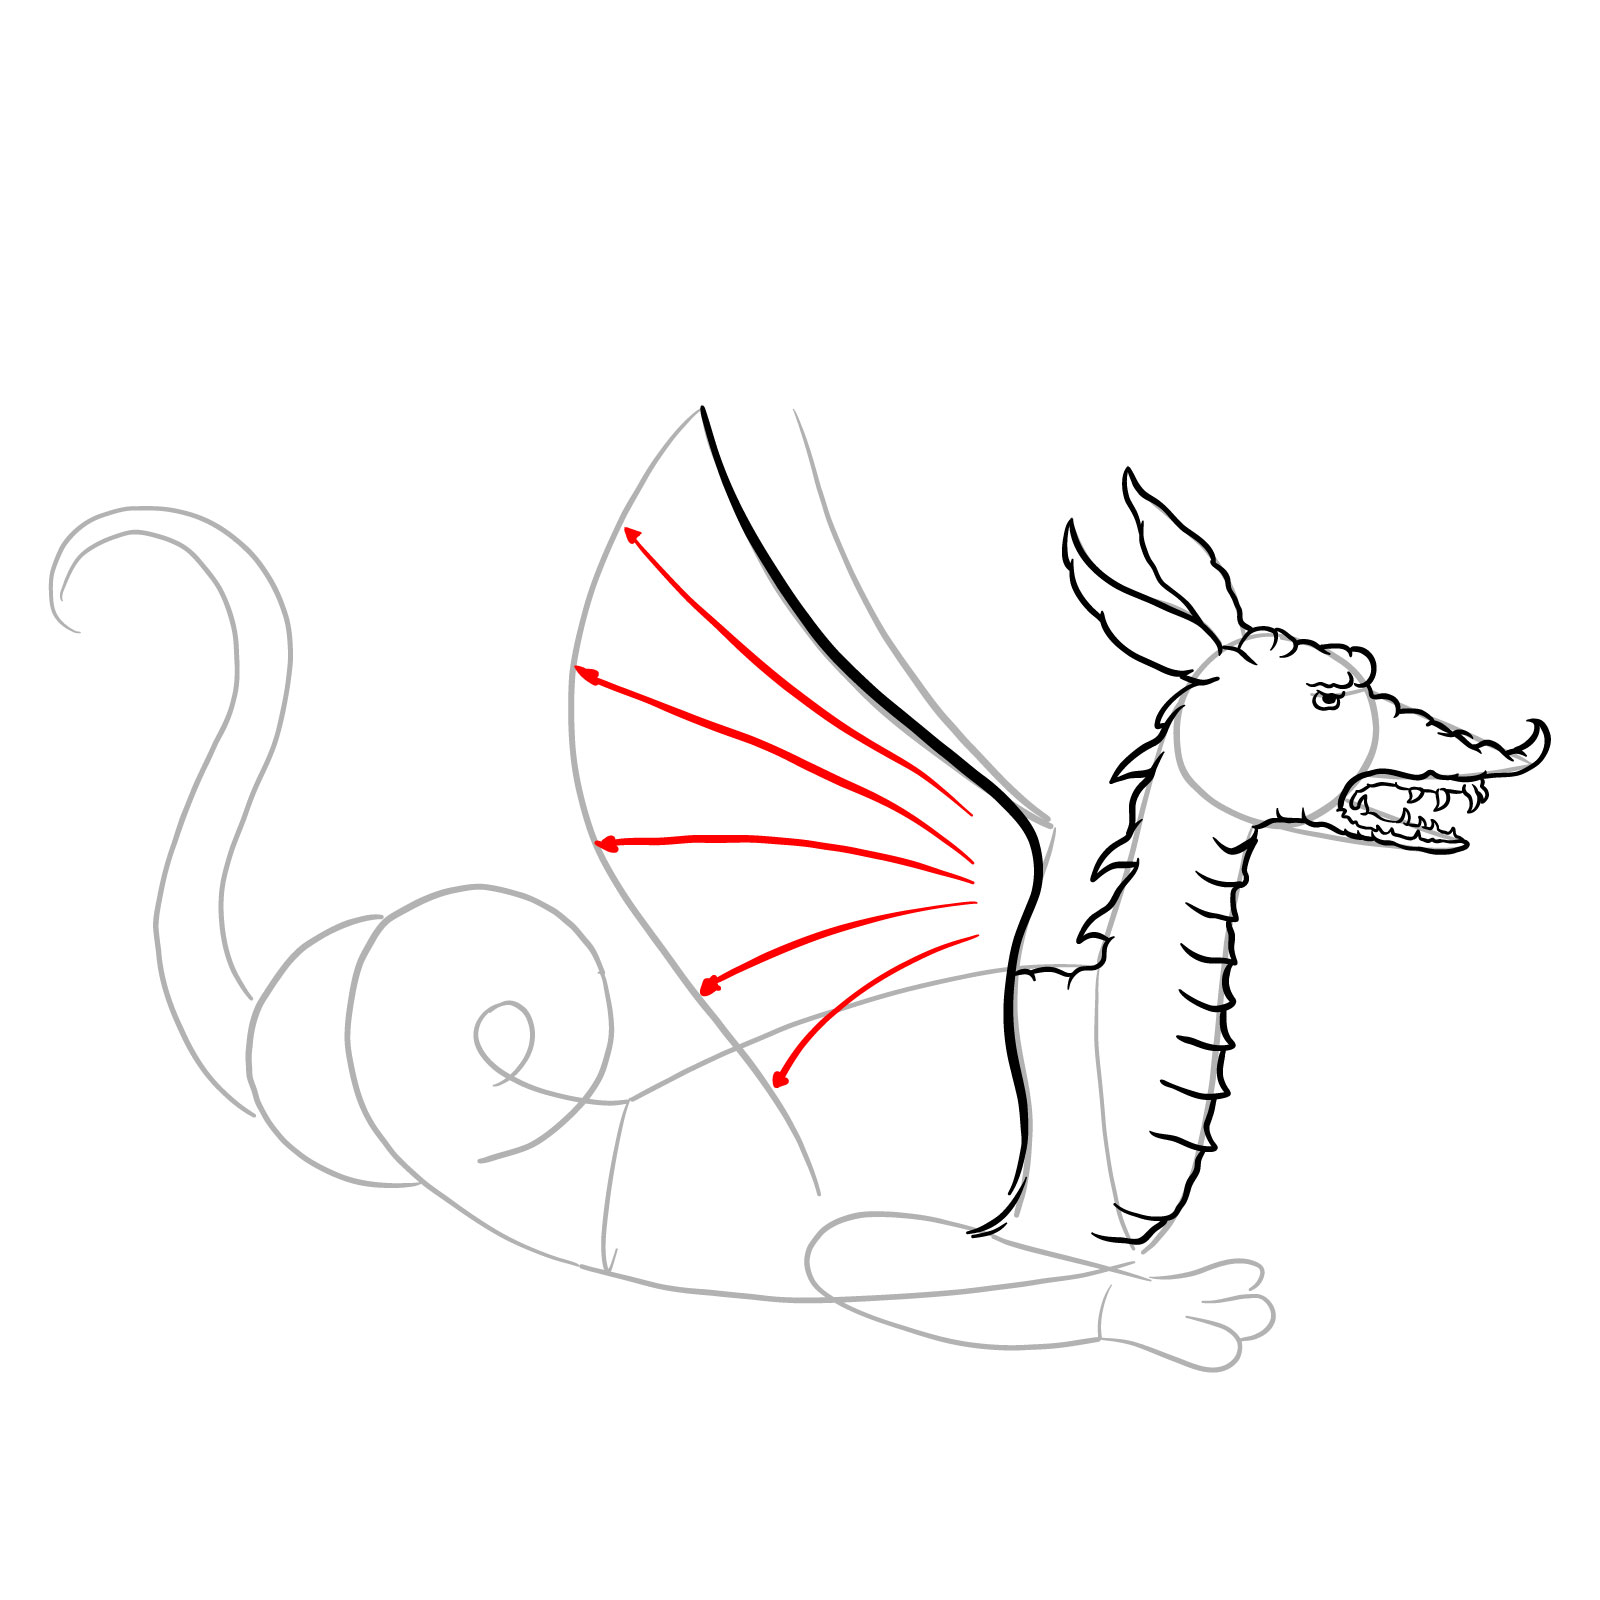 How to draw a Knucker dragon - step 13